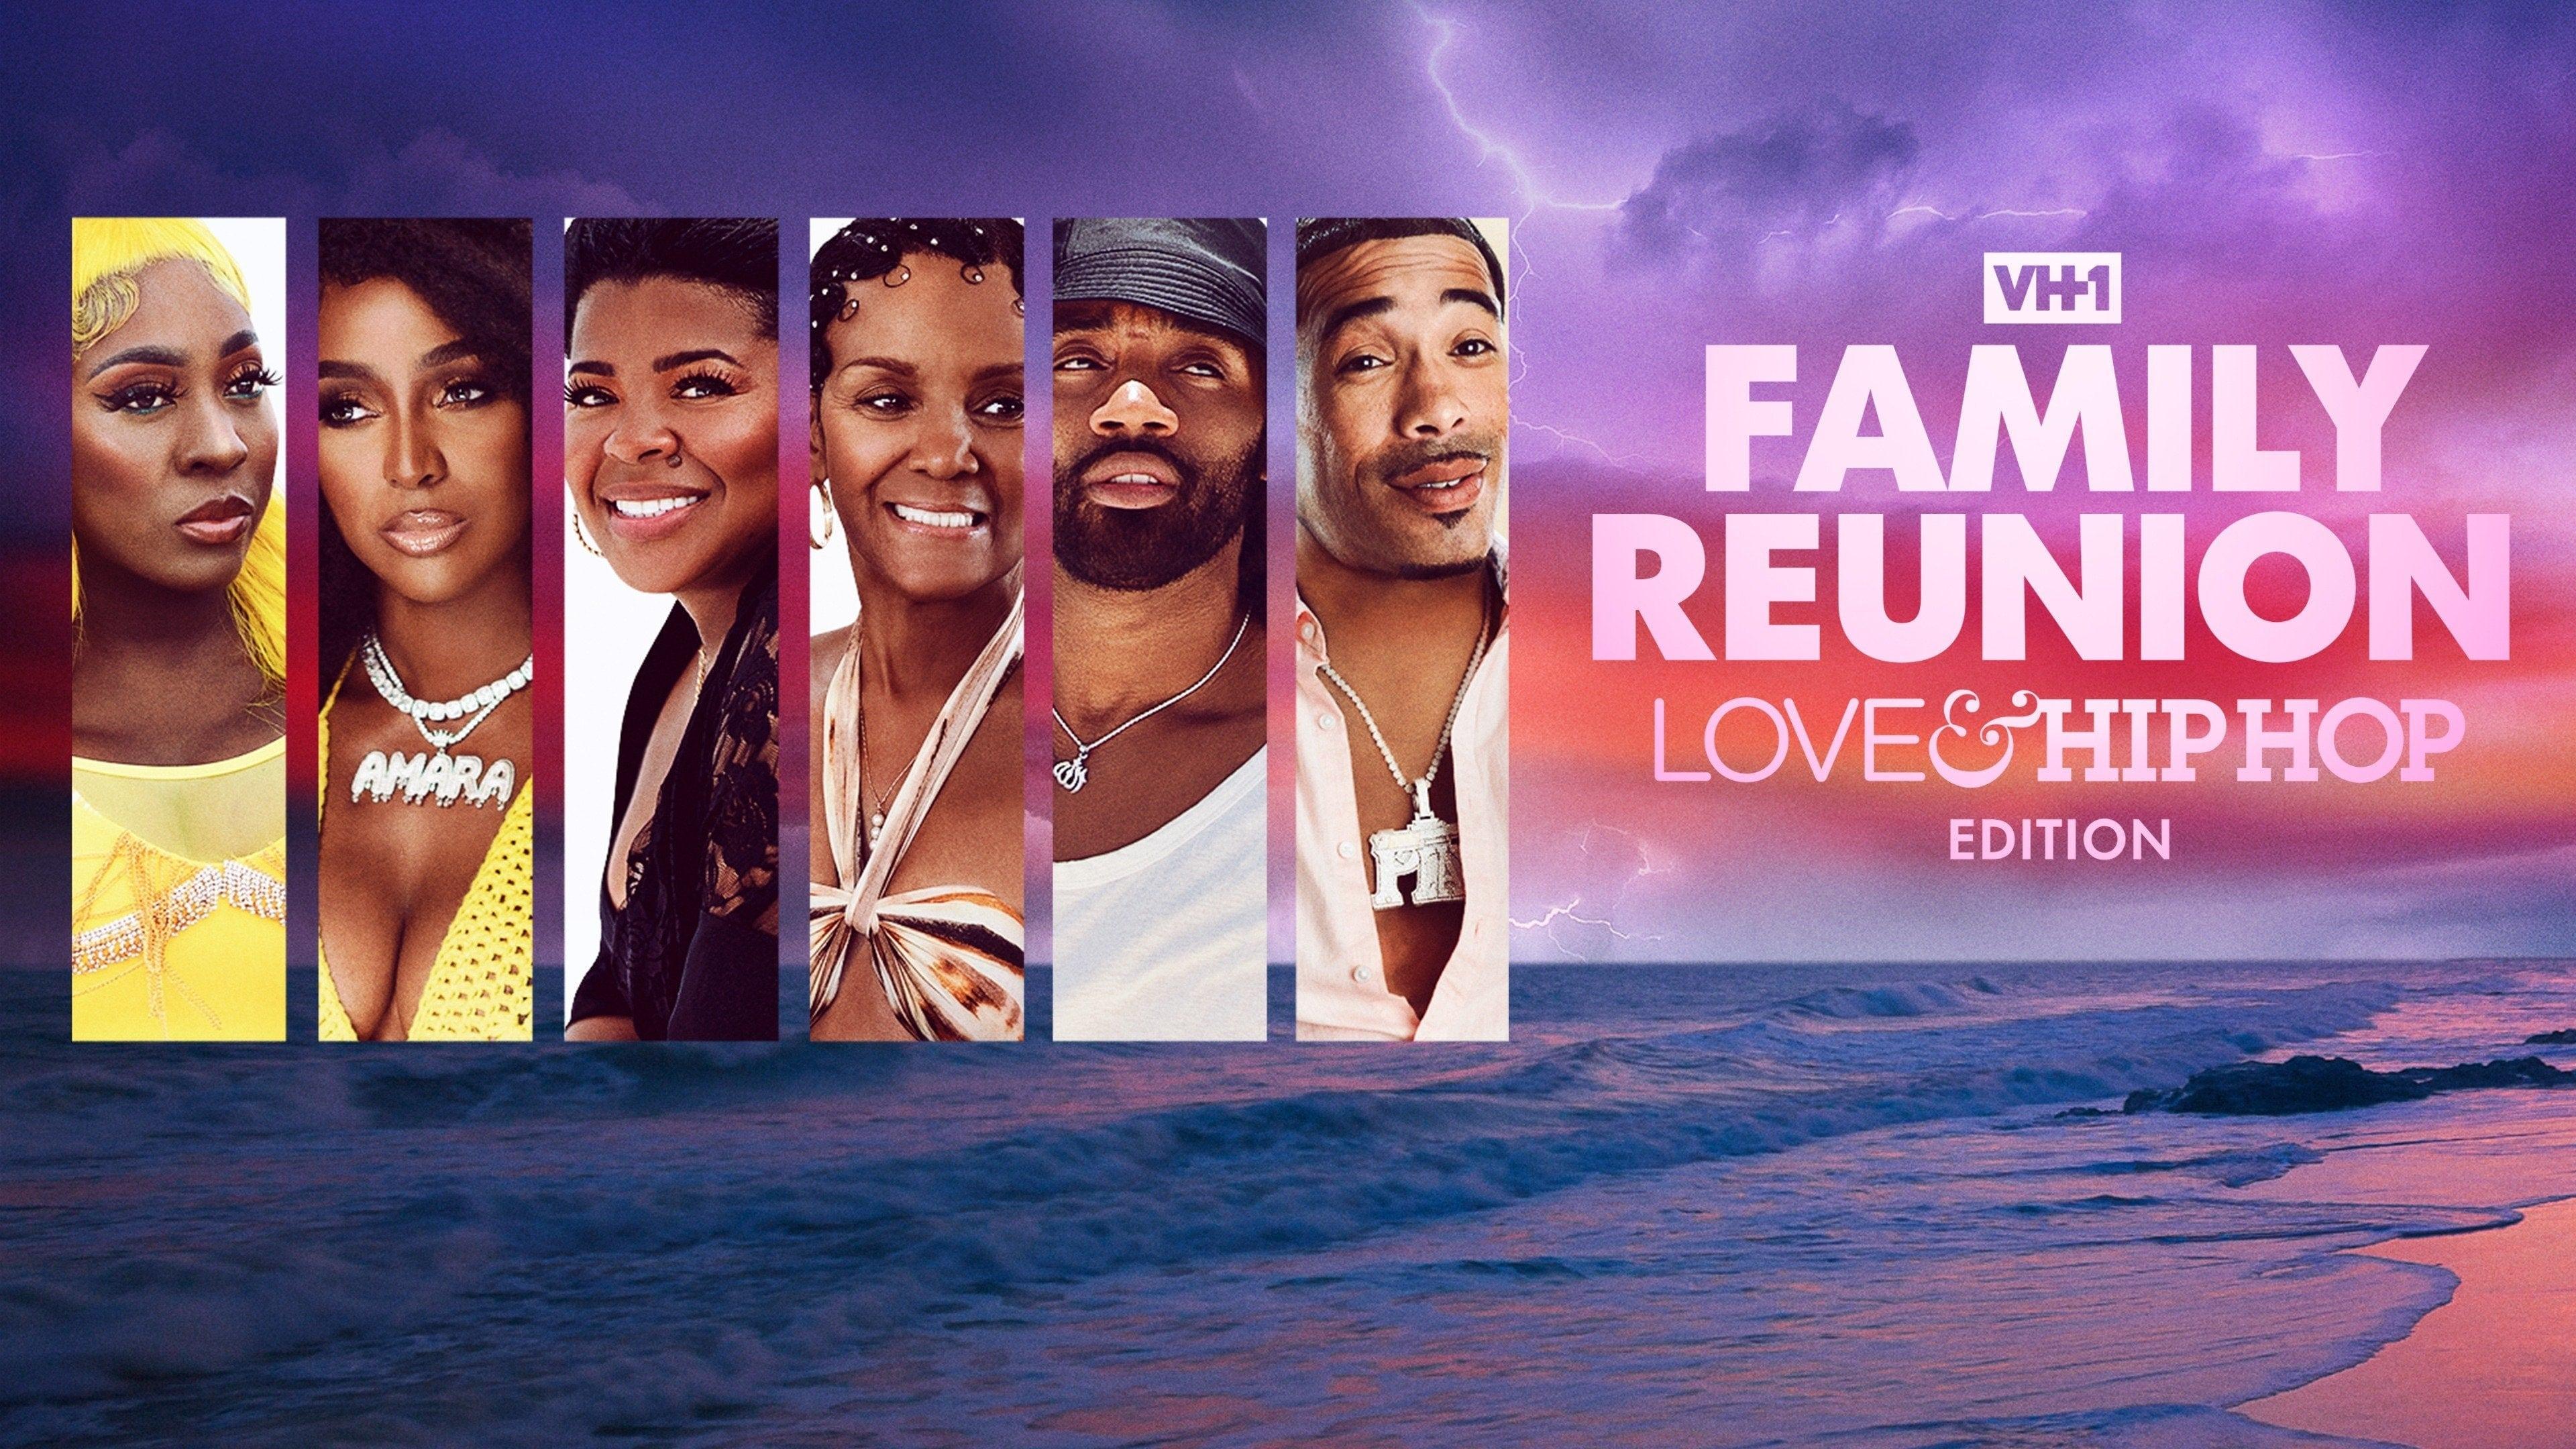 VH1 Family Reunion: Love & Hip Hop Edition backdrop